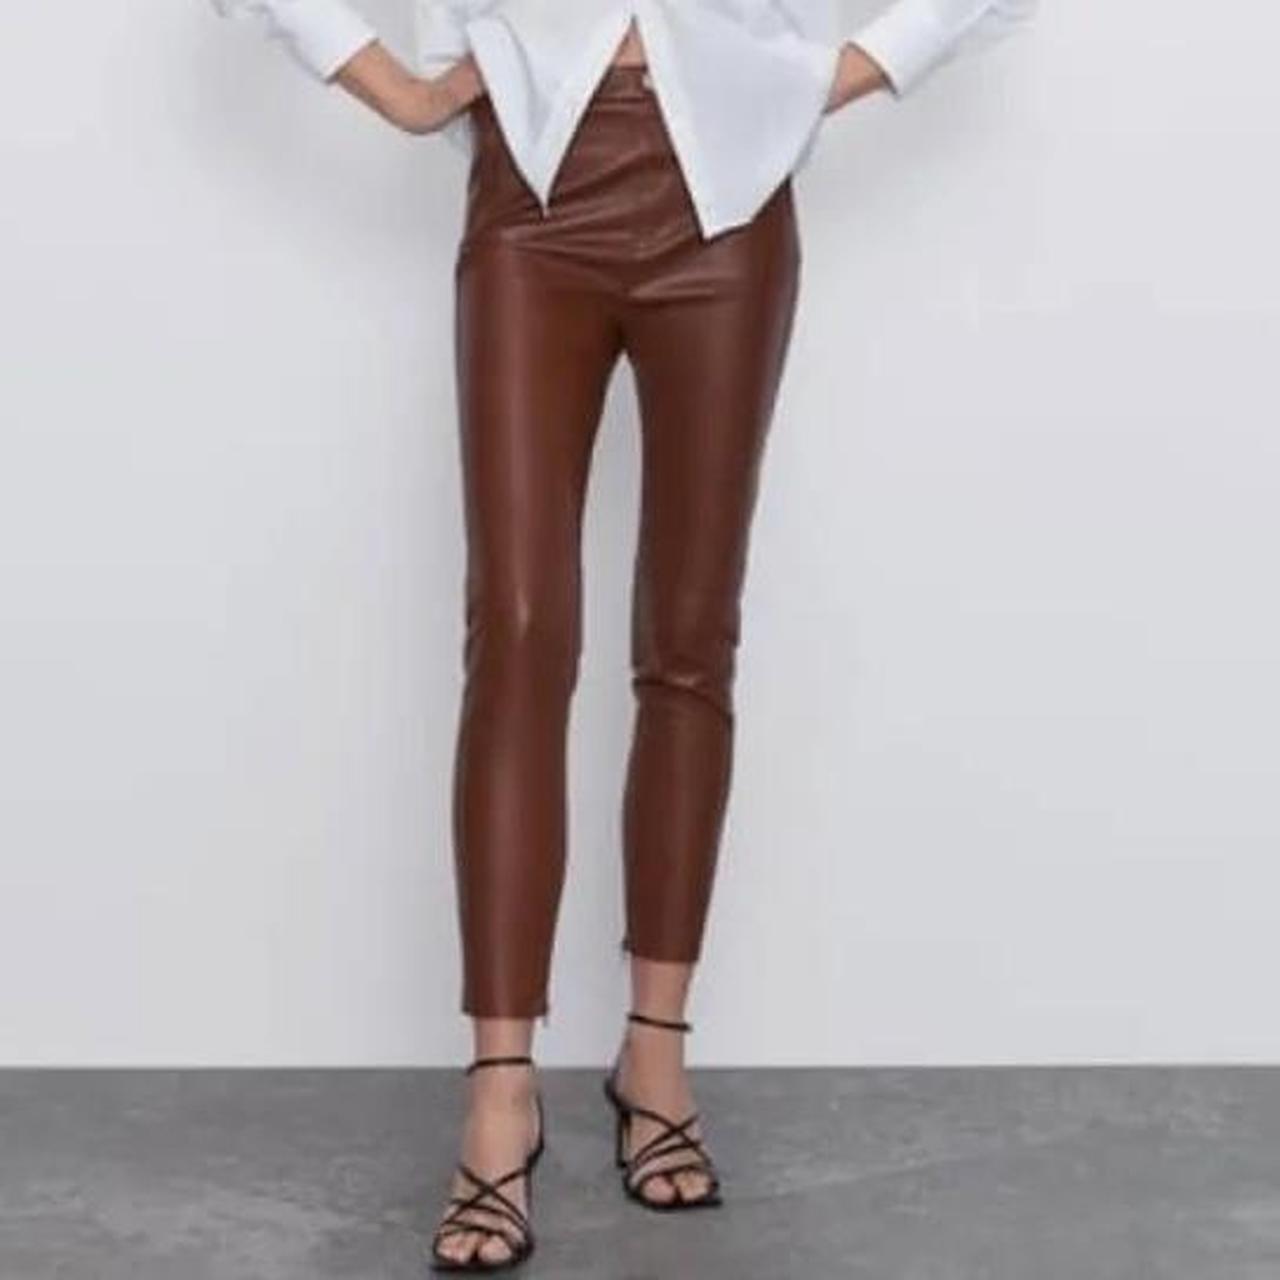 Zara brown leather trousers